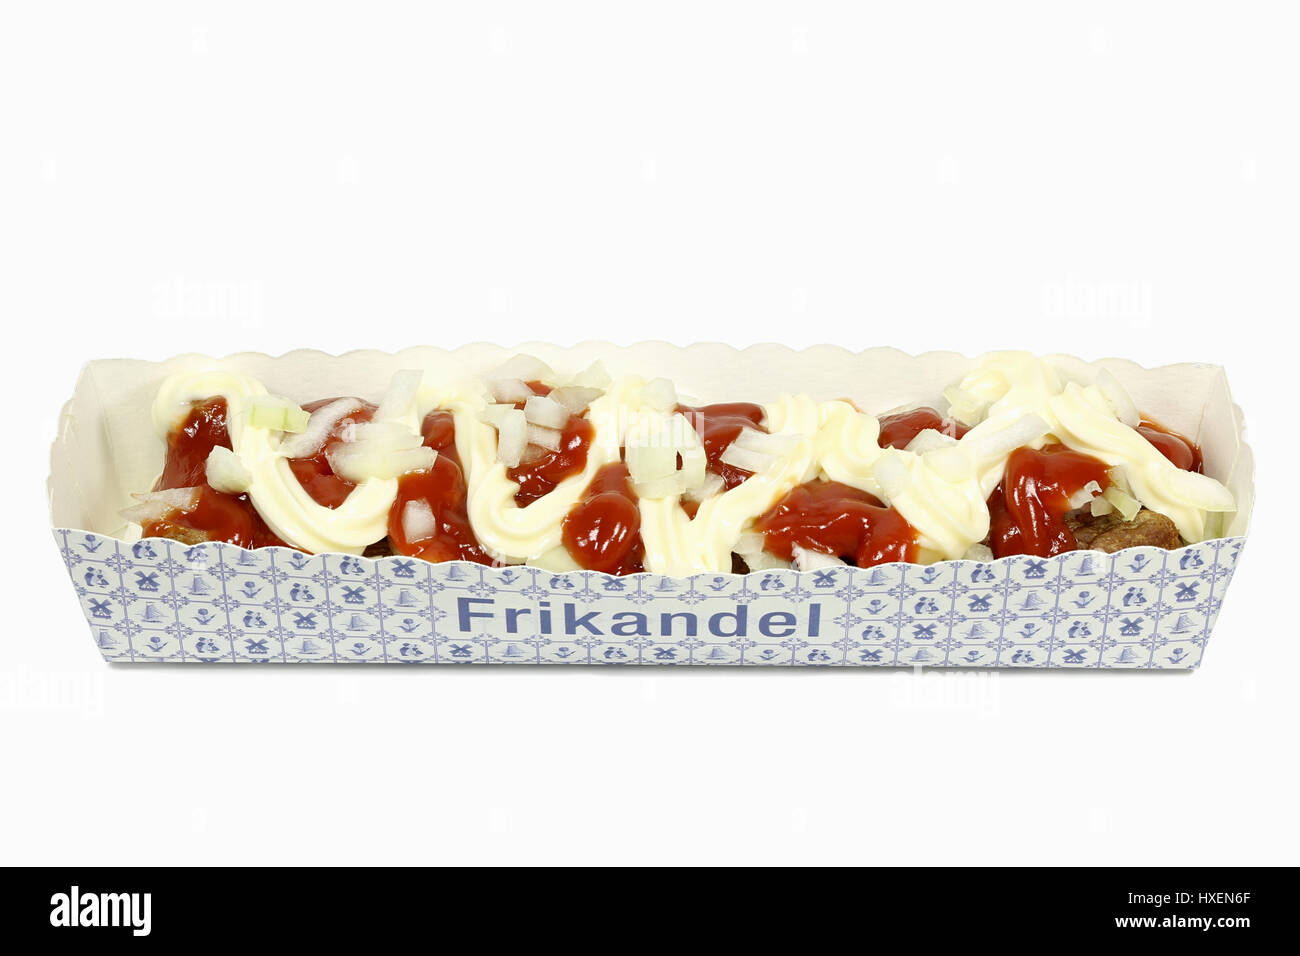 Especial frikandel holandés tradicional en un envase de cartón aislado sobre fondo blanco. Foto de stock